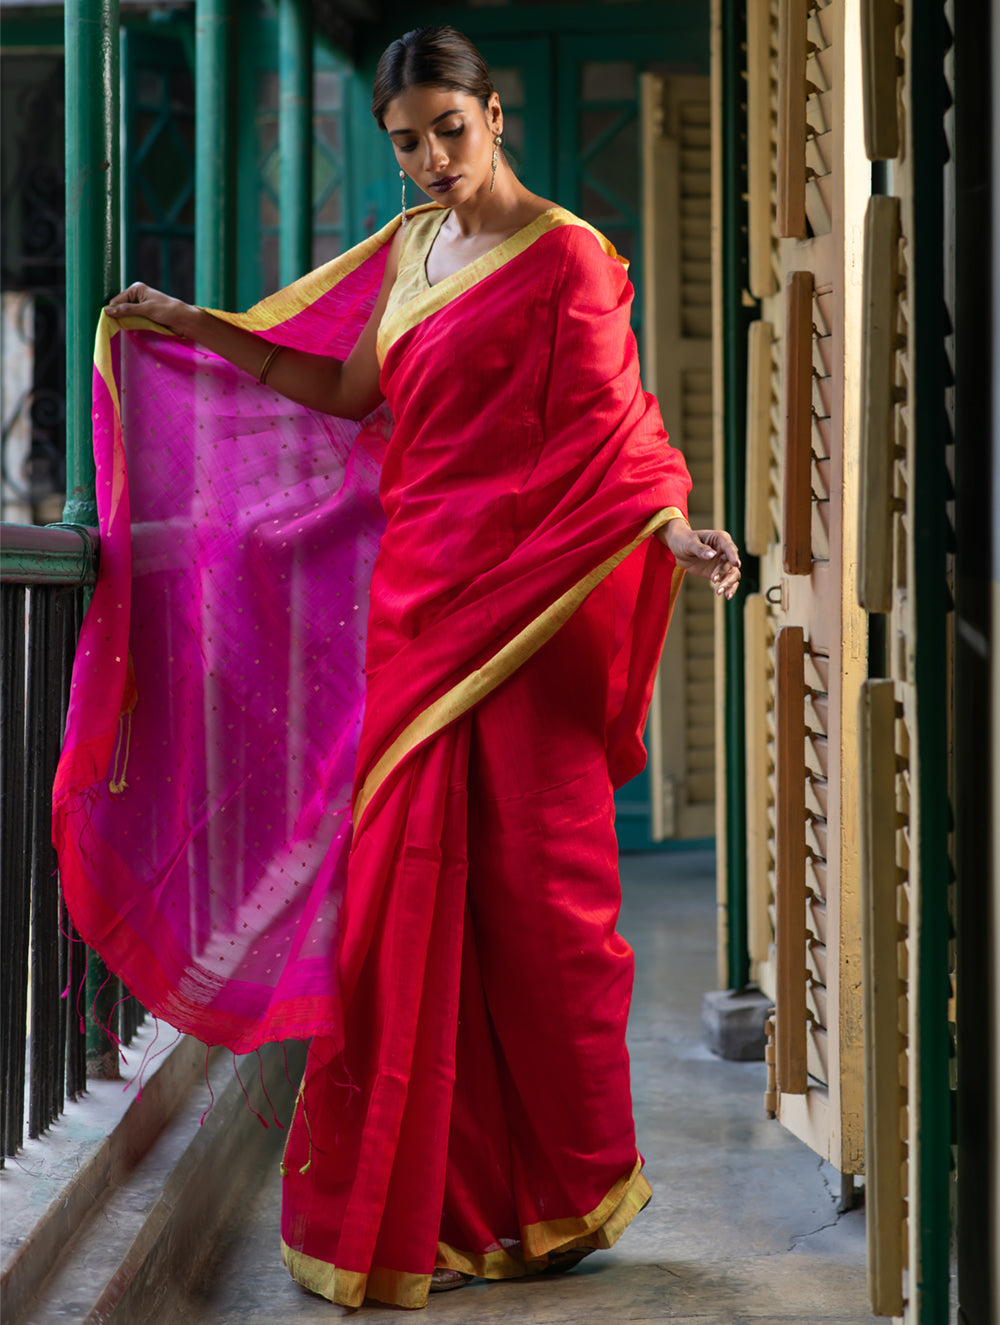 Load image into Gallery viewer, Vibrant Weaves. Handwoven Bengal Resham Matka Silk Saree - Pink Checks